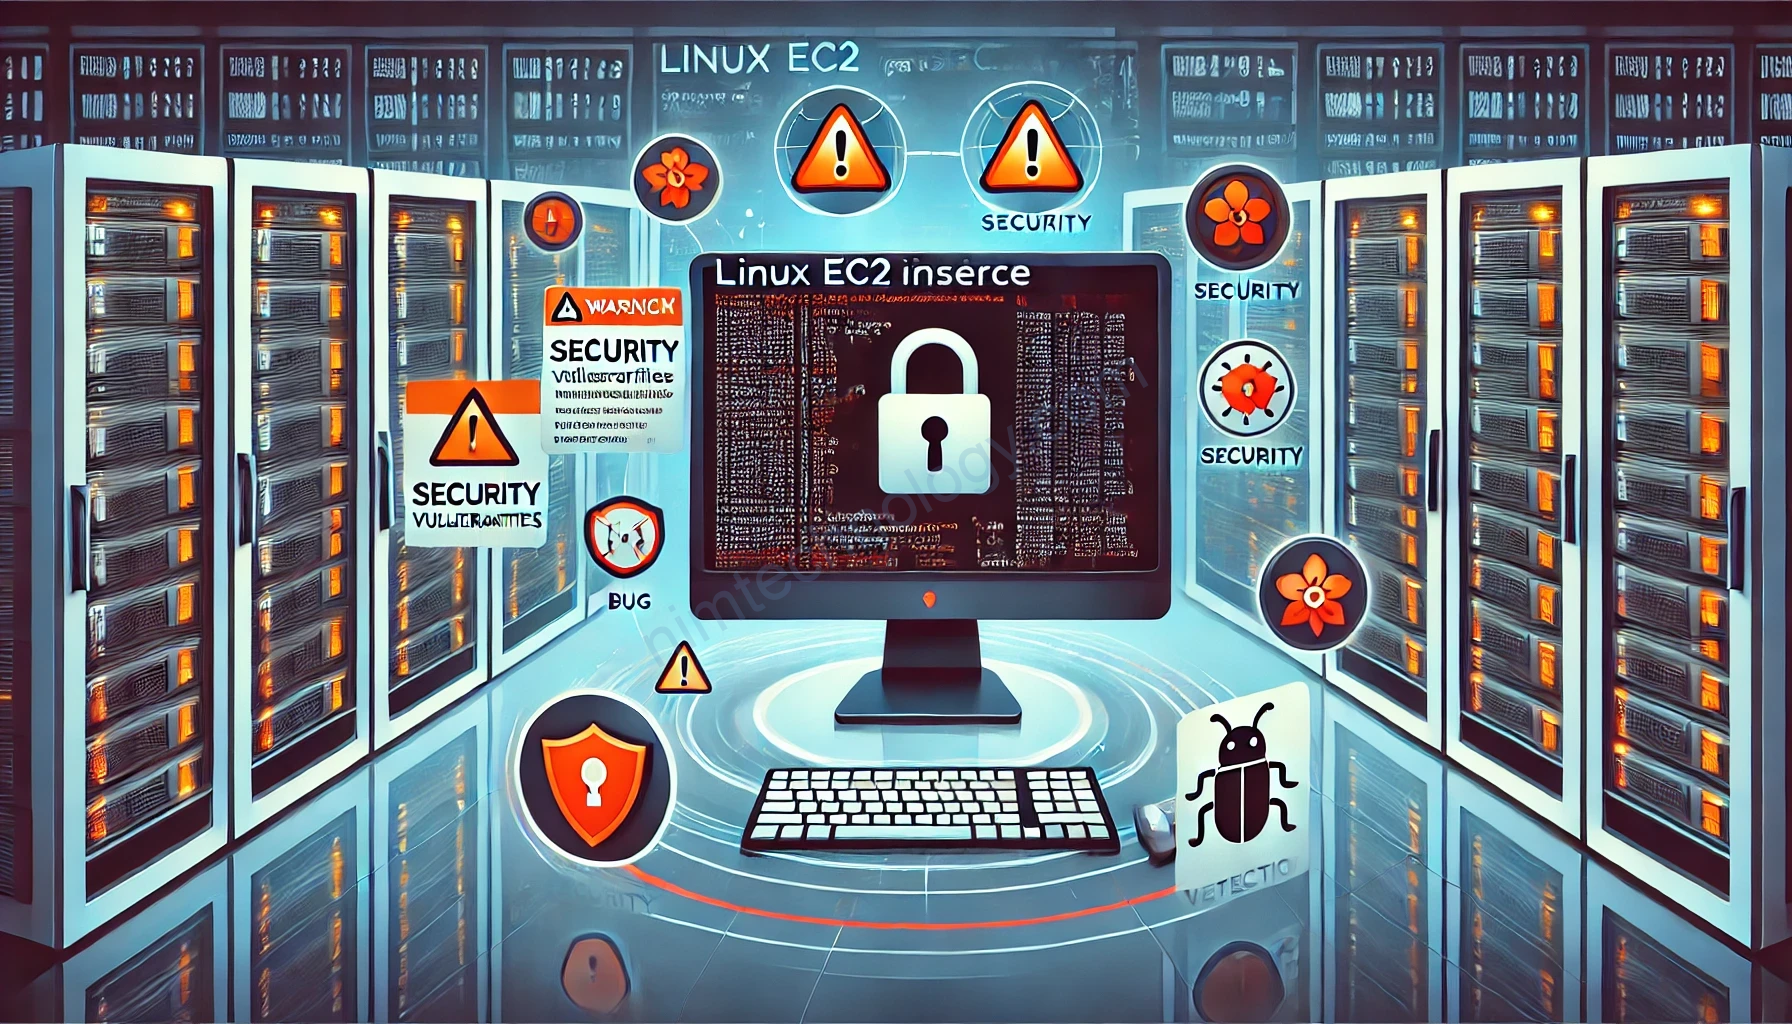 [Security] Find vulnerabilities in your EC2 Linux instance